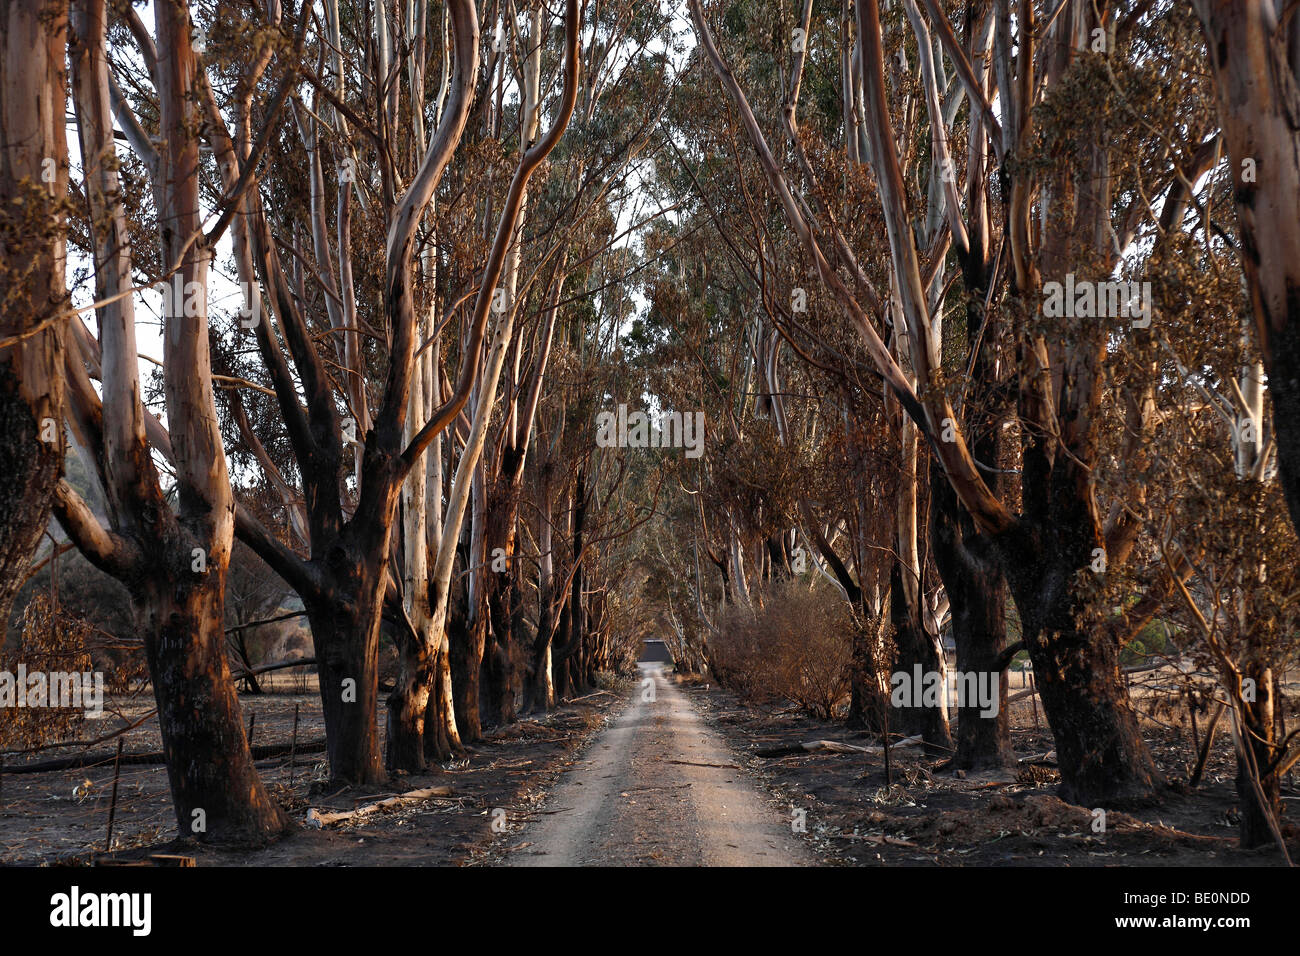 australian bush fire damage,australian bush fire aftermath,post australian bush fire, Stock Photo